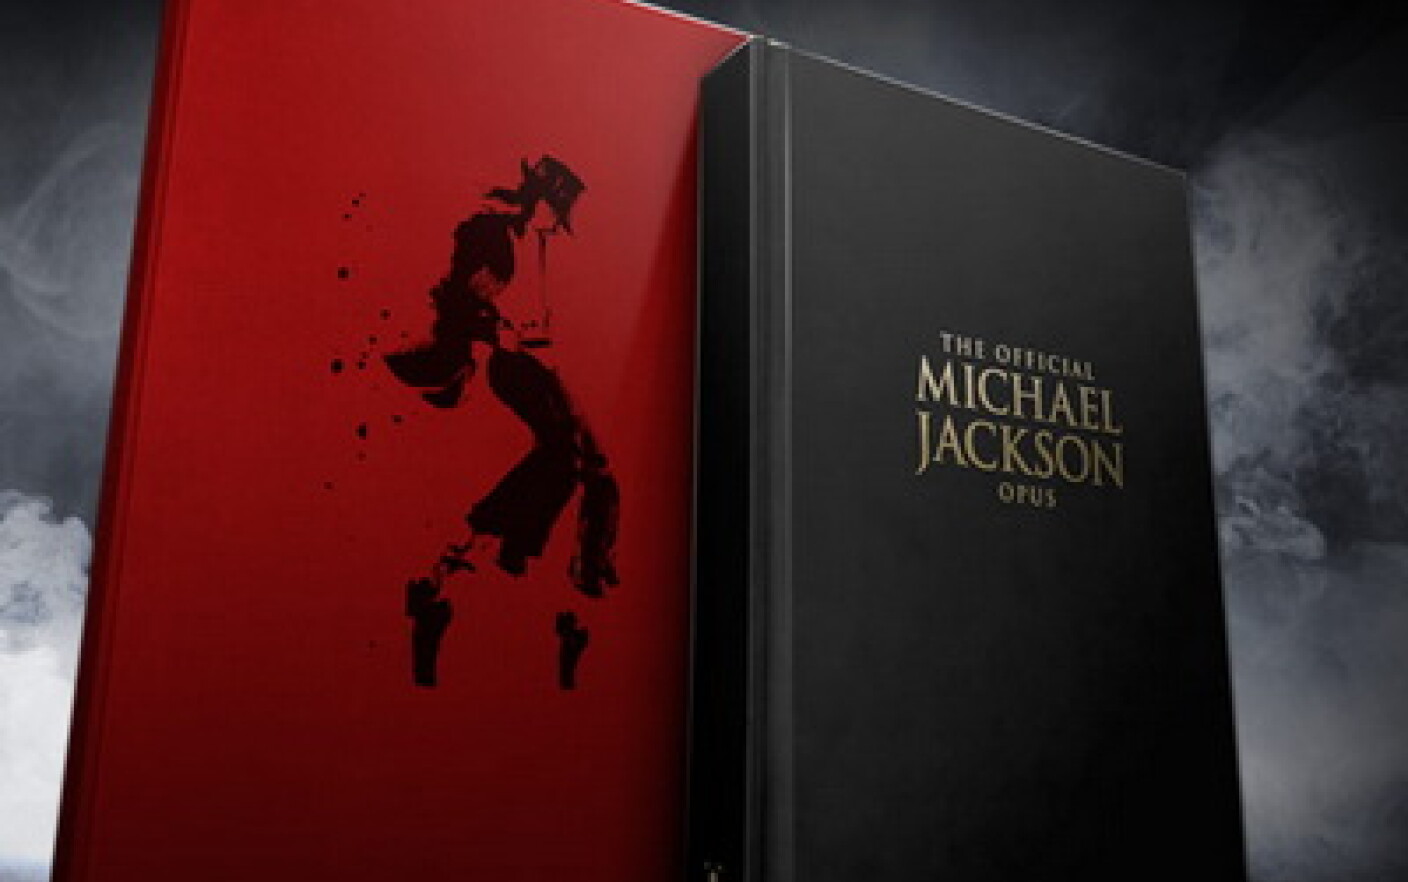 Supply plate Chemistry Cea mai recenta carte despre Michael Jackson cantareste 11,7 kilograme! -  Stirileprotv.ro